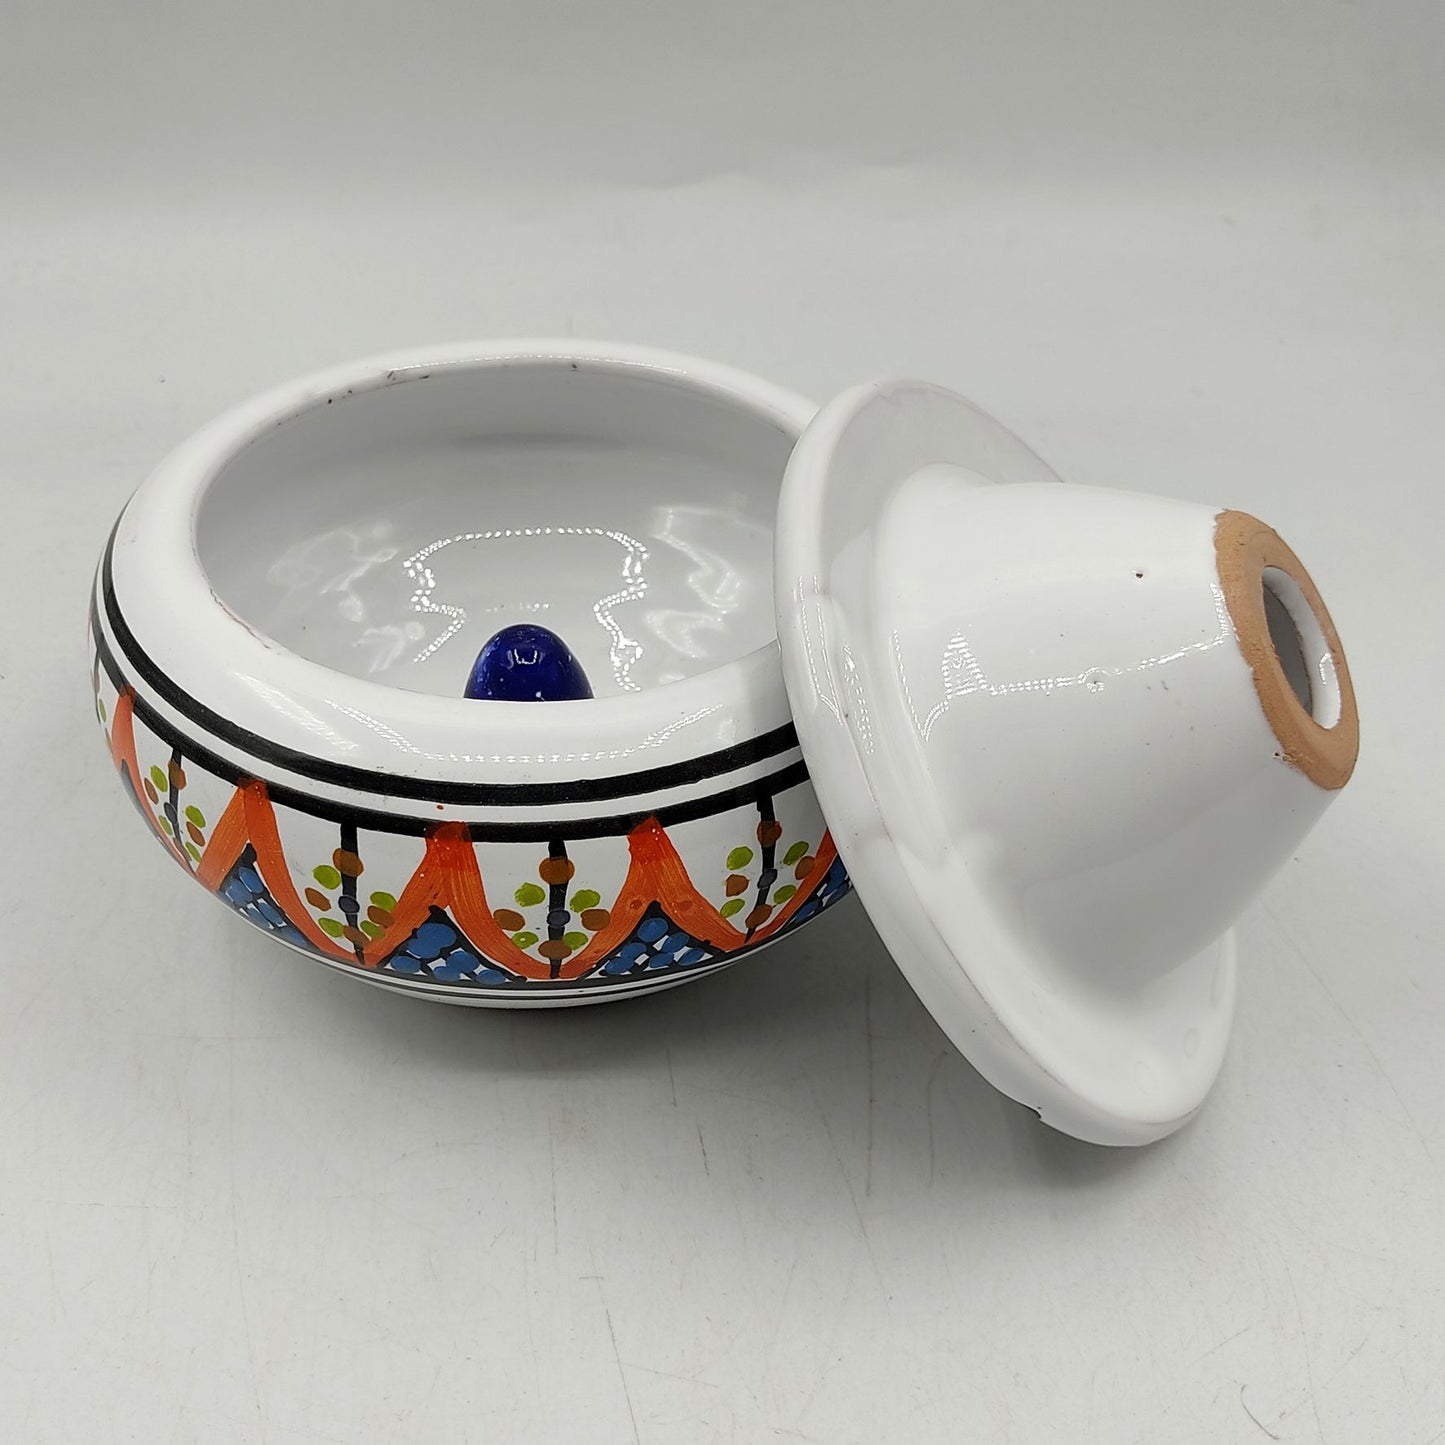 Etnico Arredo Posacenere Ceramica Antiodore Tunisina Marocchine 2007211203